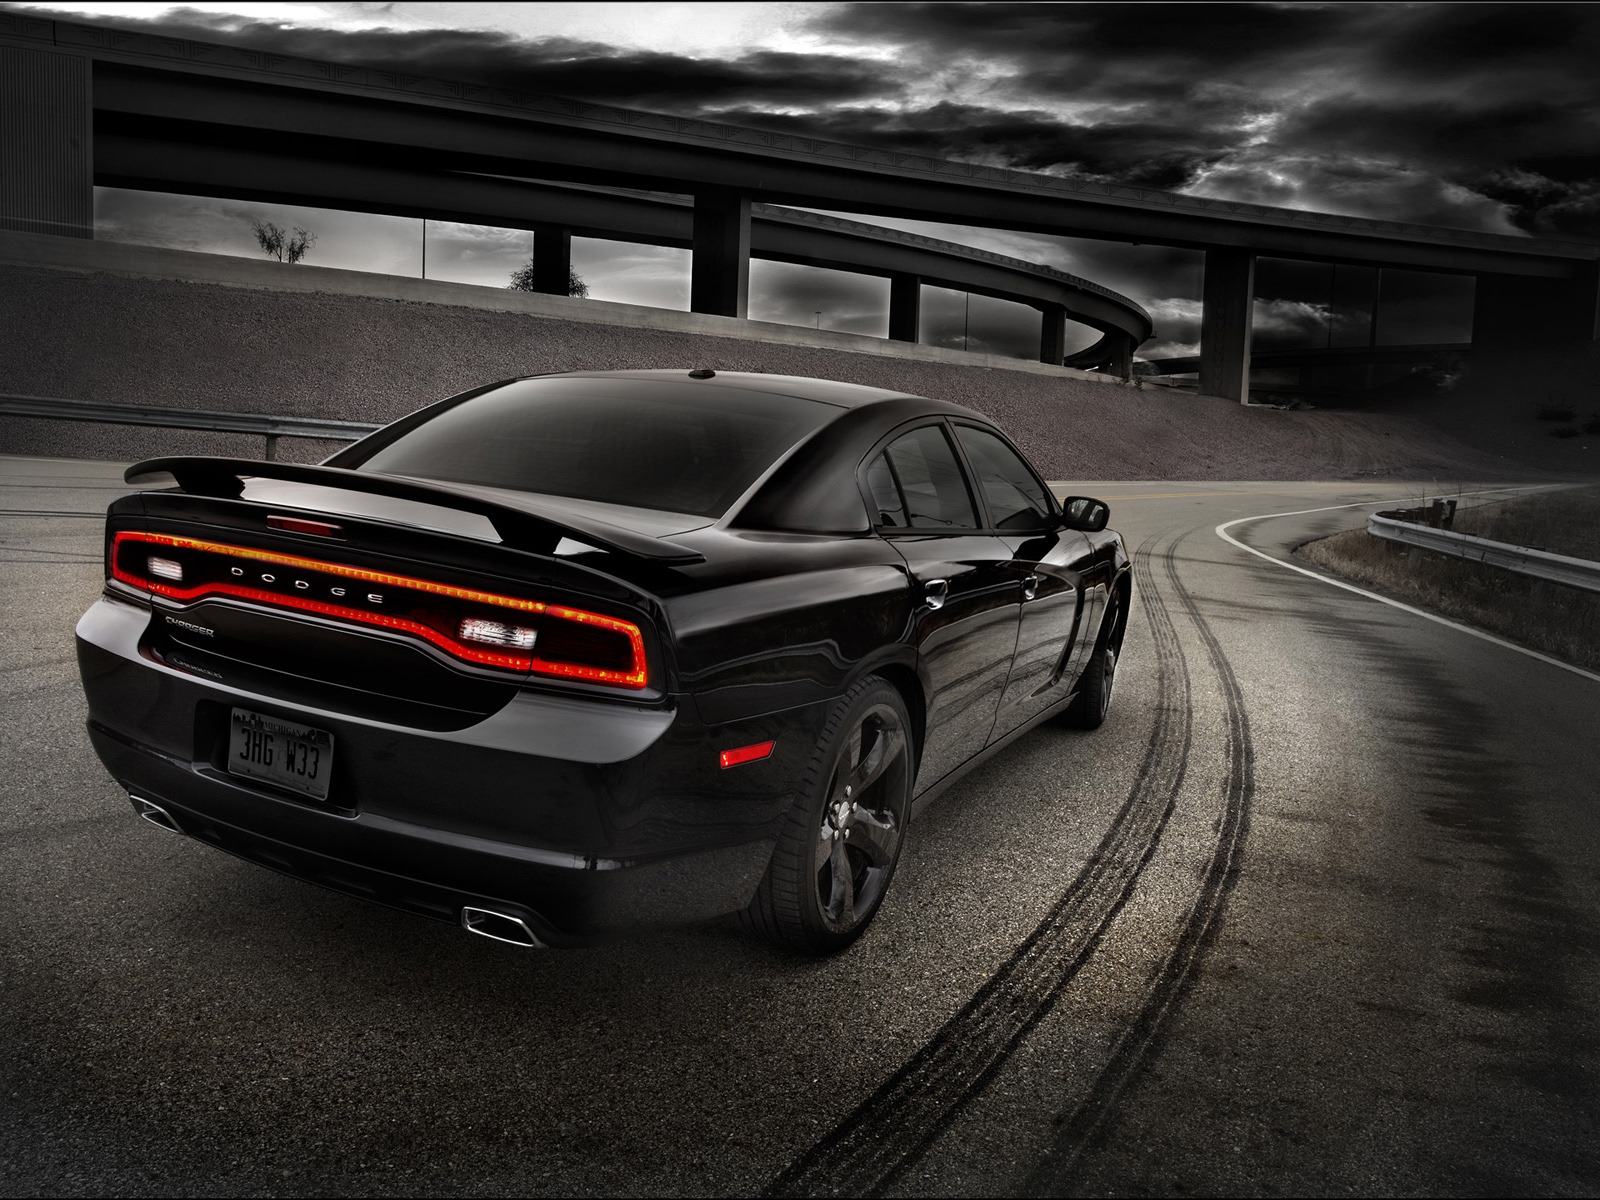 Dodge Blacktop Rear for 1600 x 1200 resolution